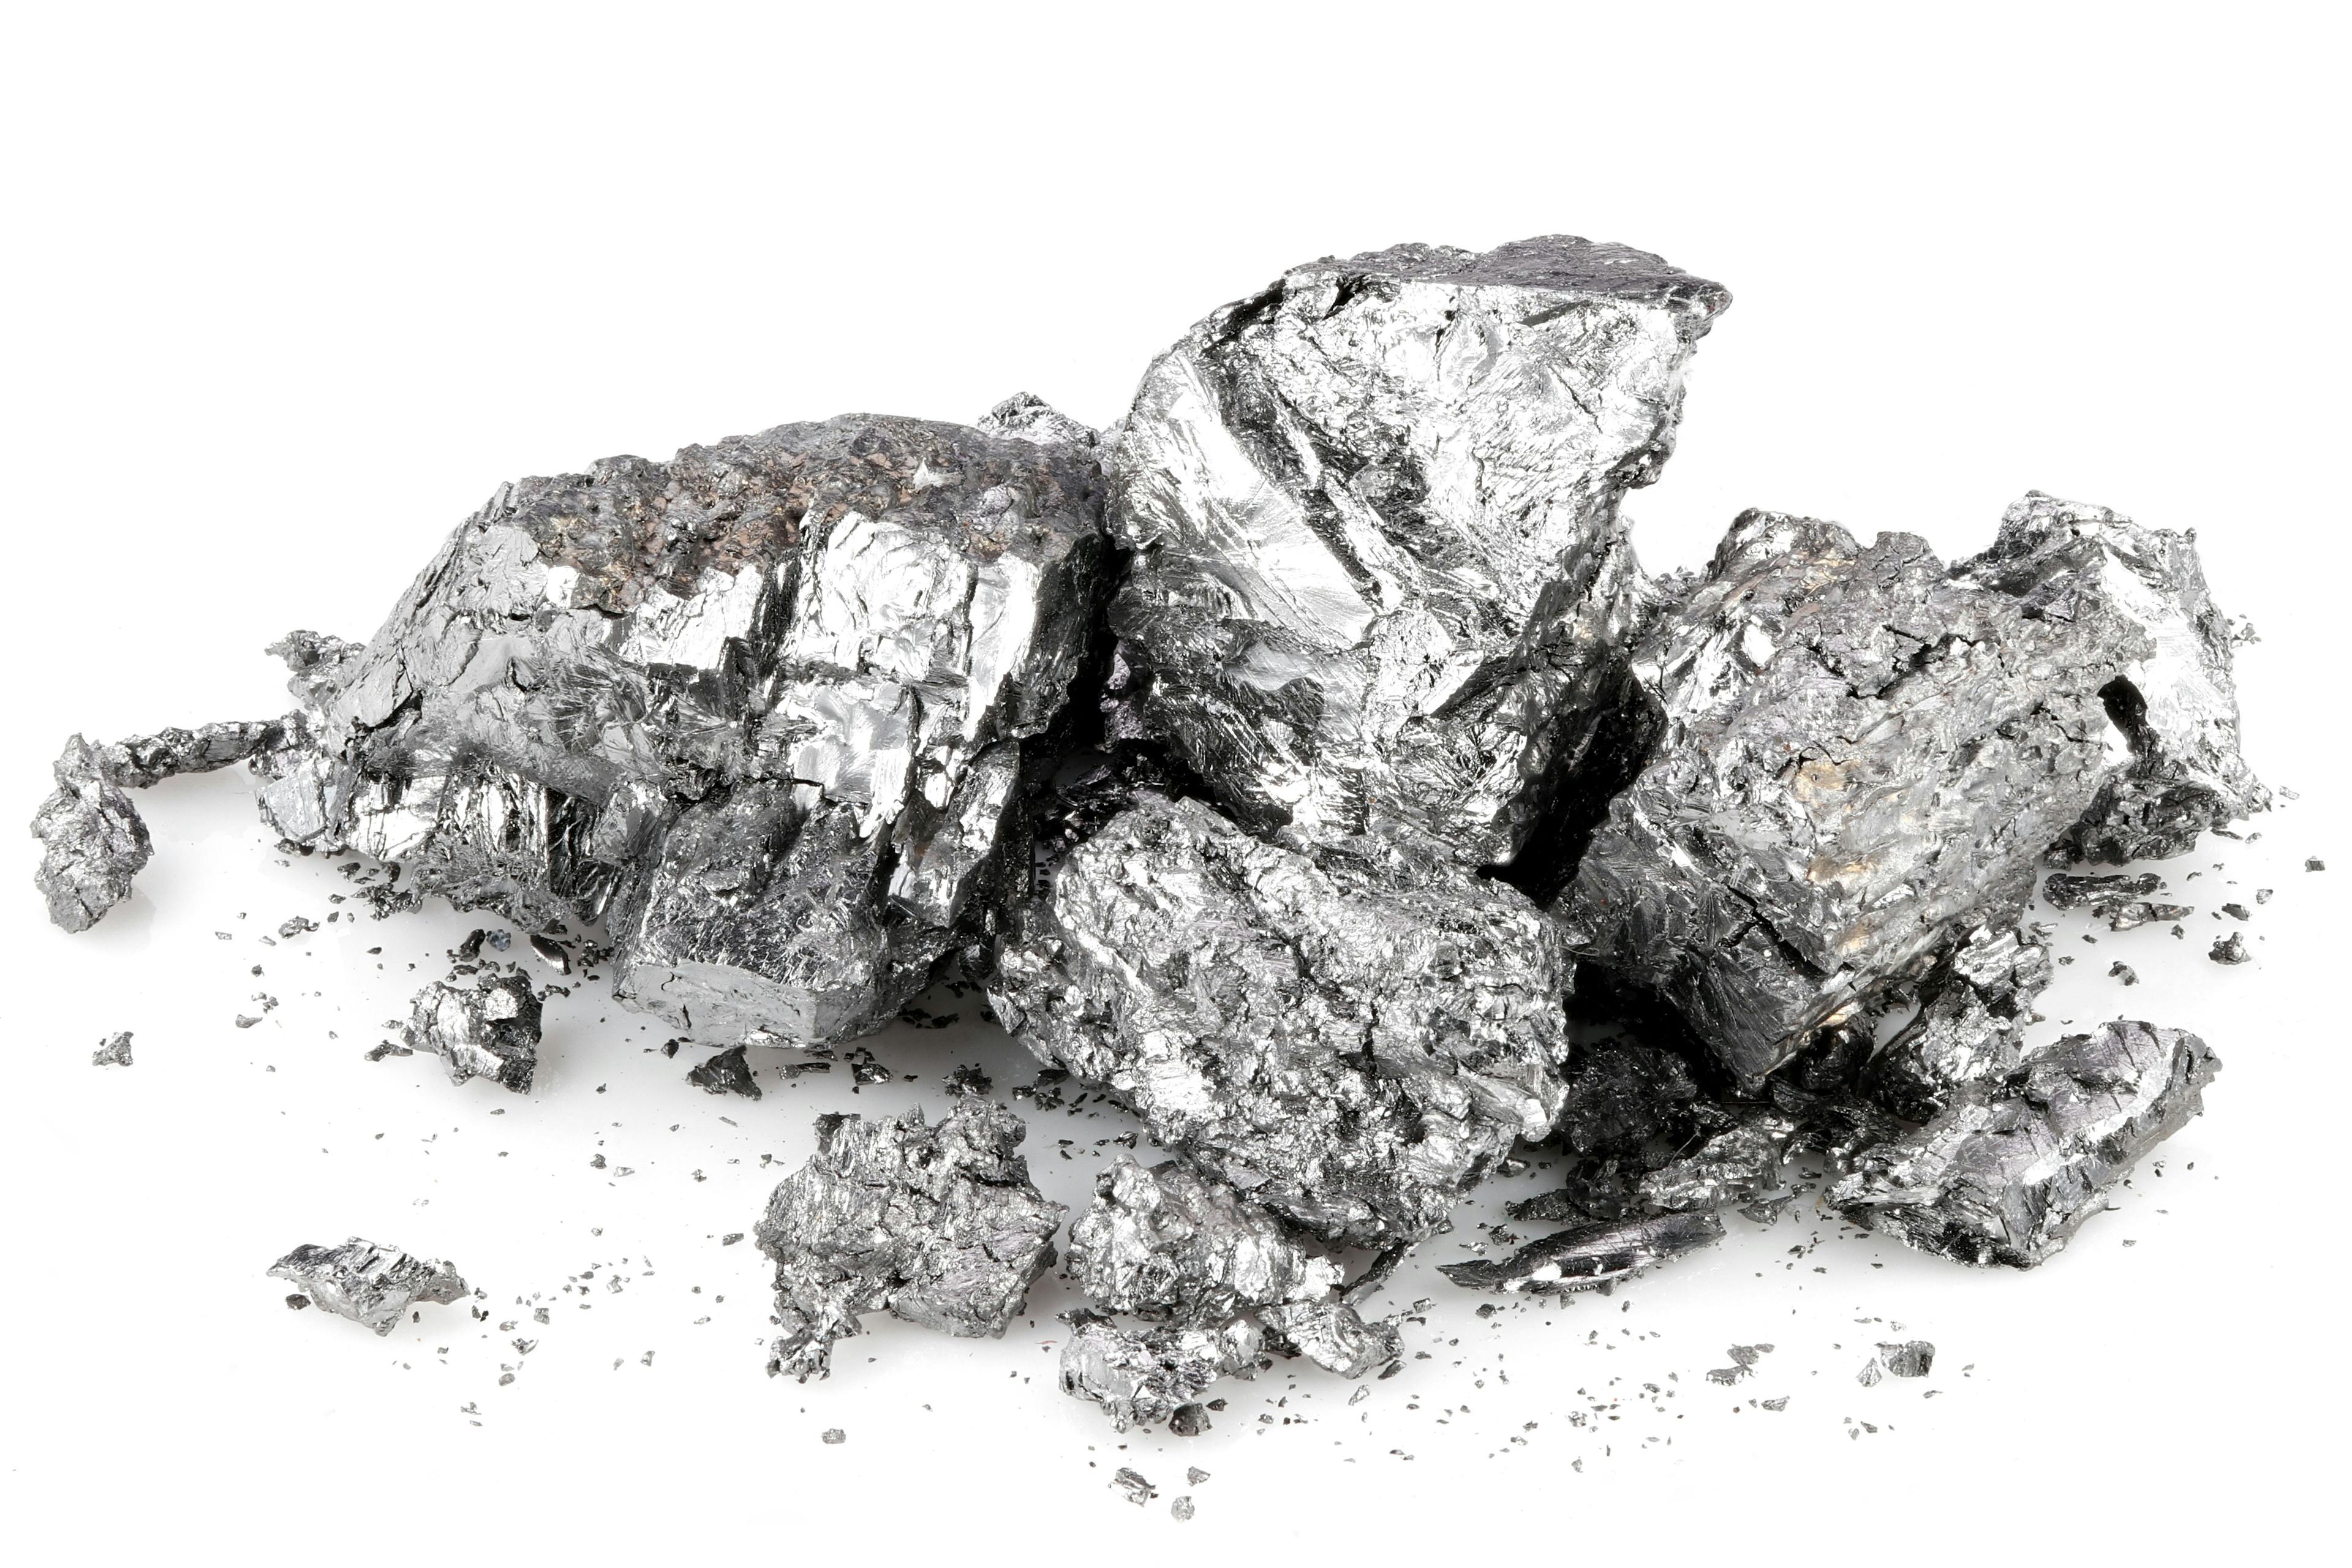 99.58% fine beryllium isolated on white background | Image Credit: © Björn Wylezich - stock.adobe.com